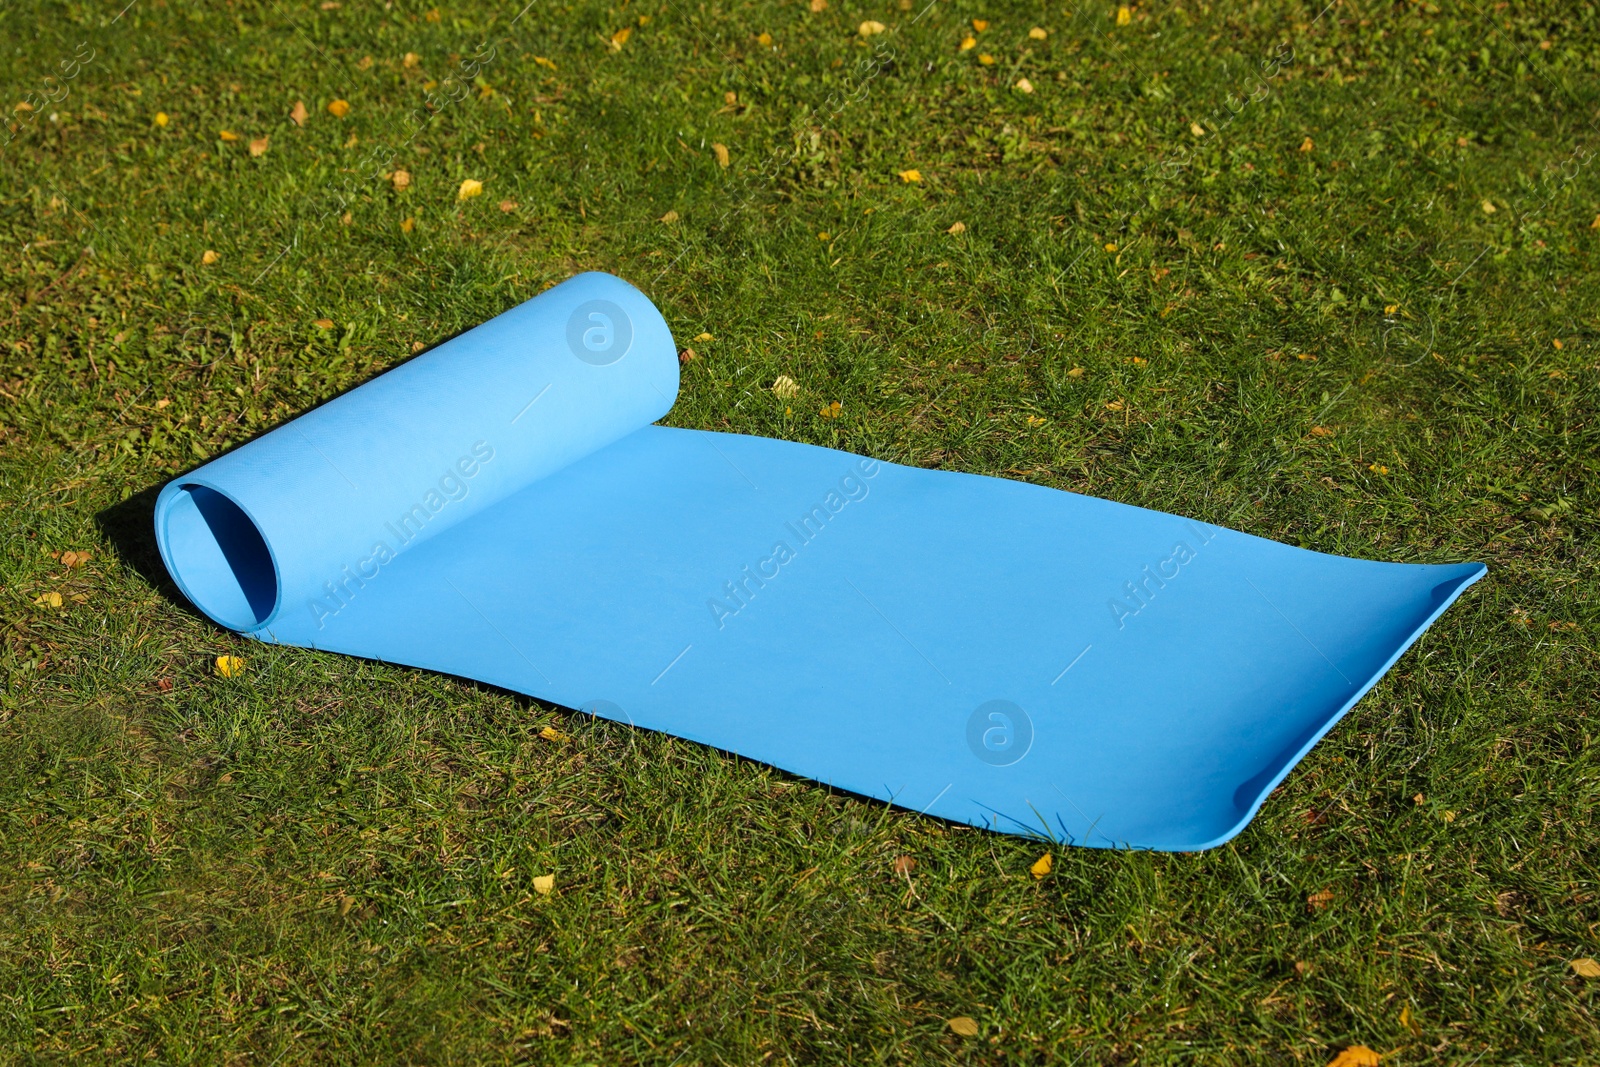 Photo of Blue karemat or fitness mat on fresh green grass outdoors